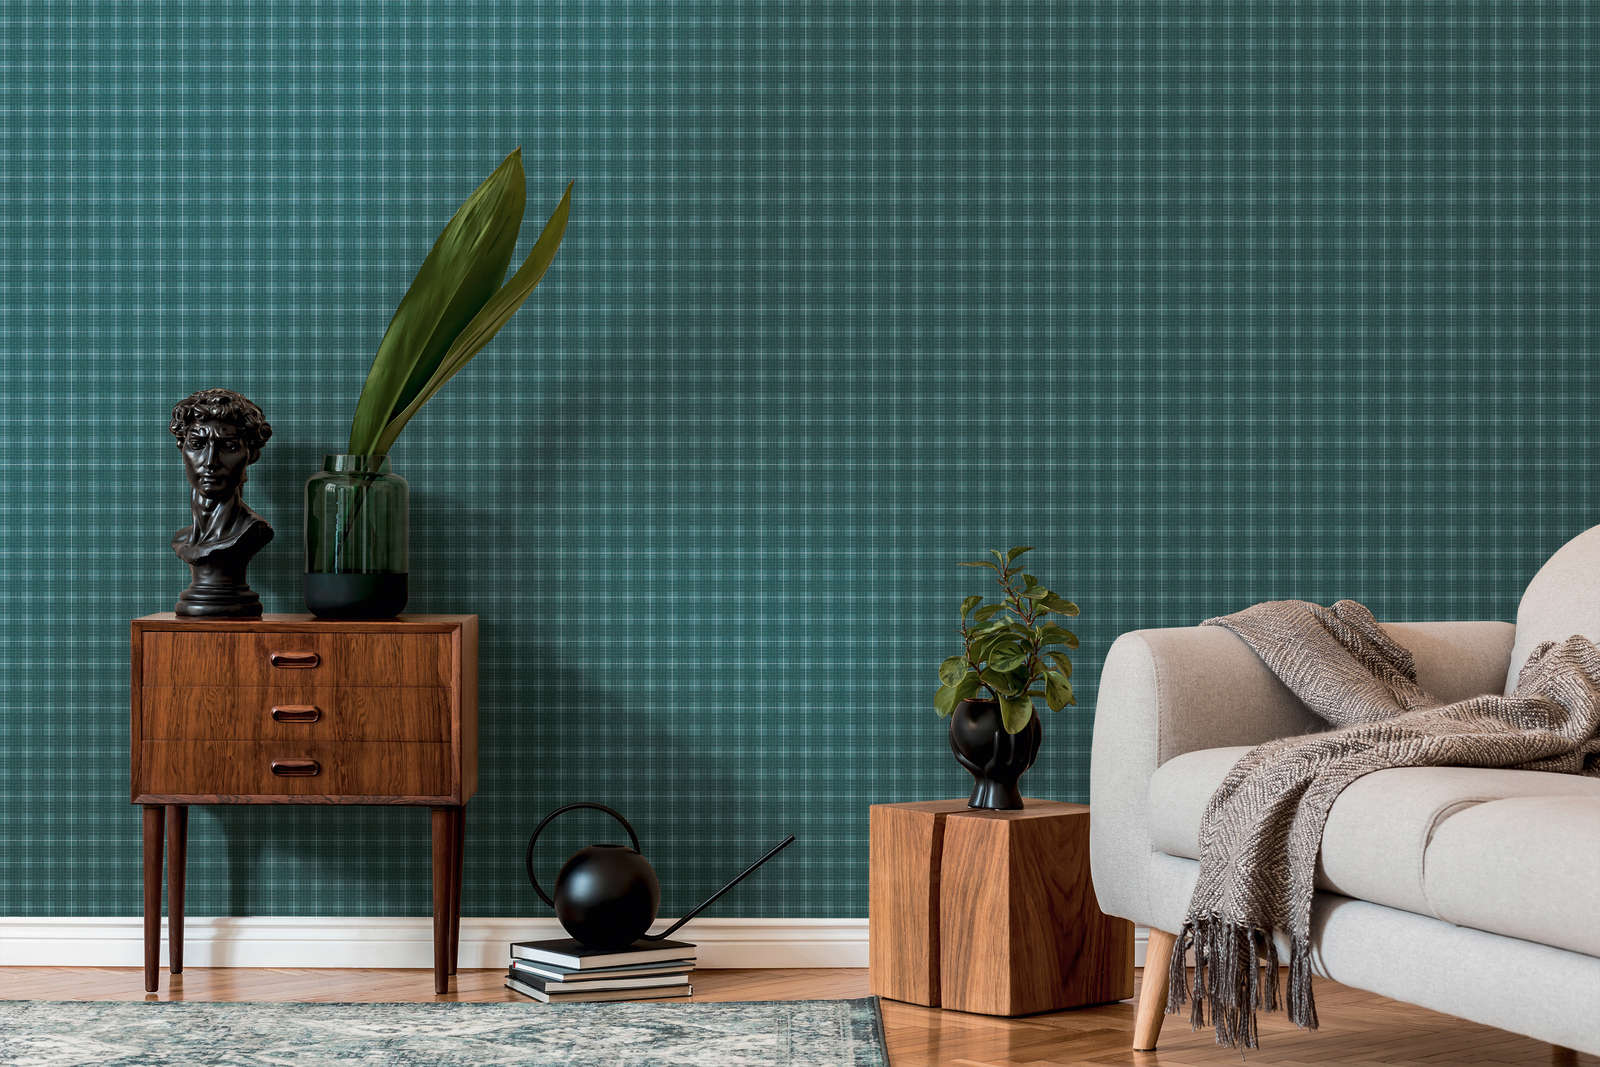             Checkered Textile Optics Non-woven Wallpaper with Flannel Pattern - Green, White
        